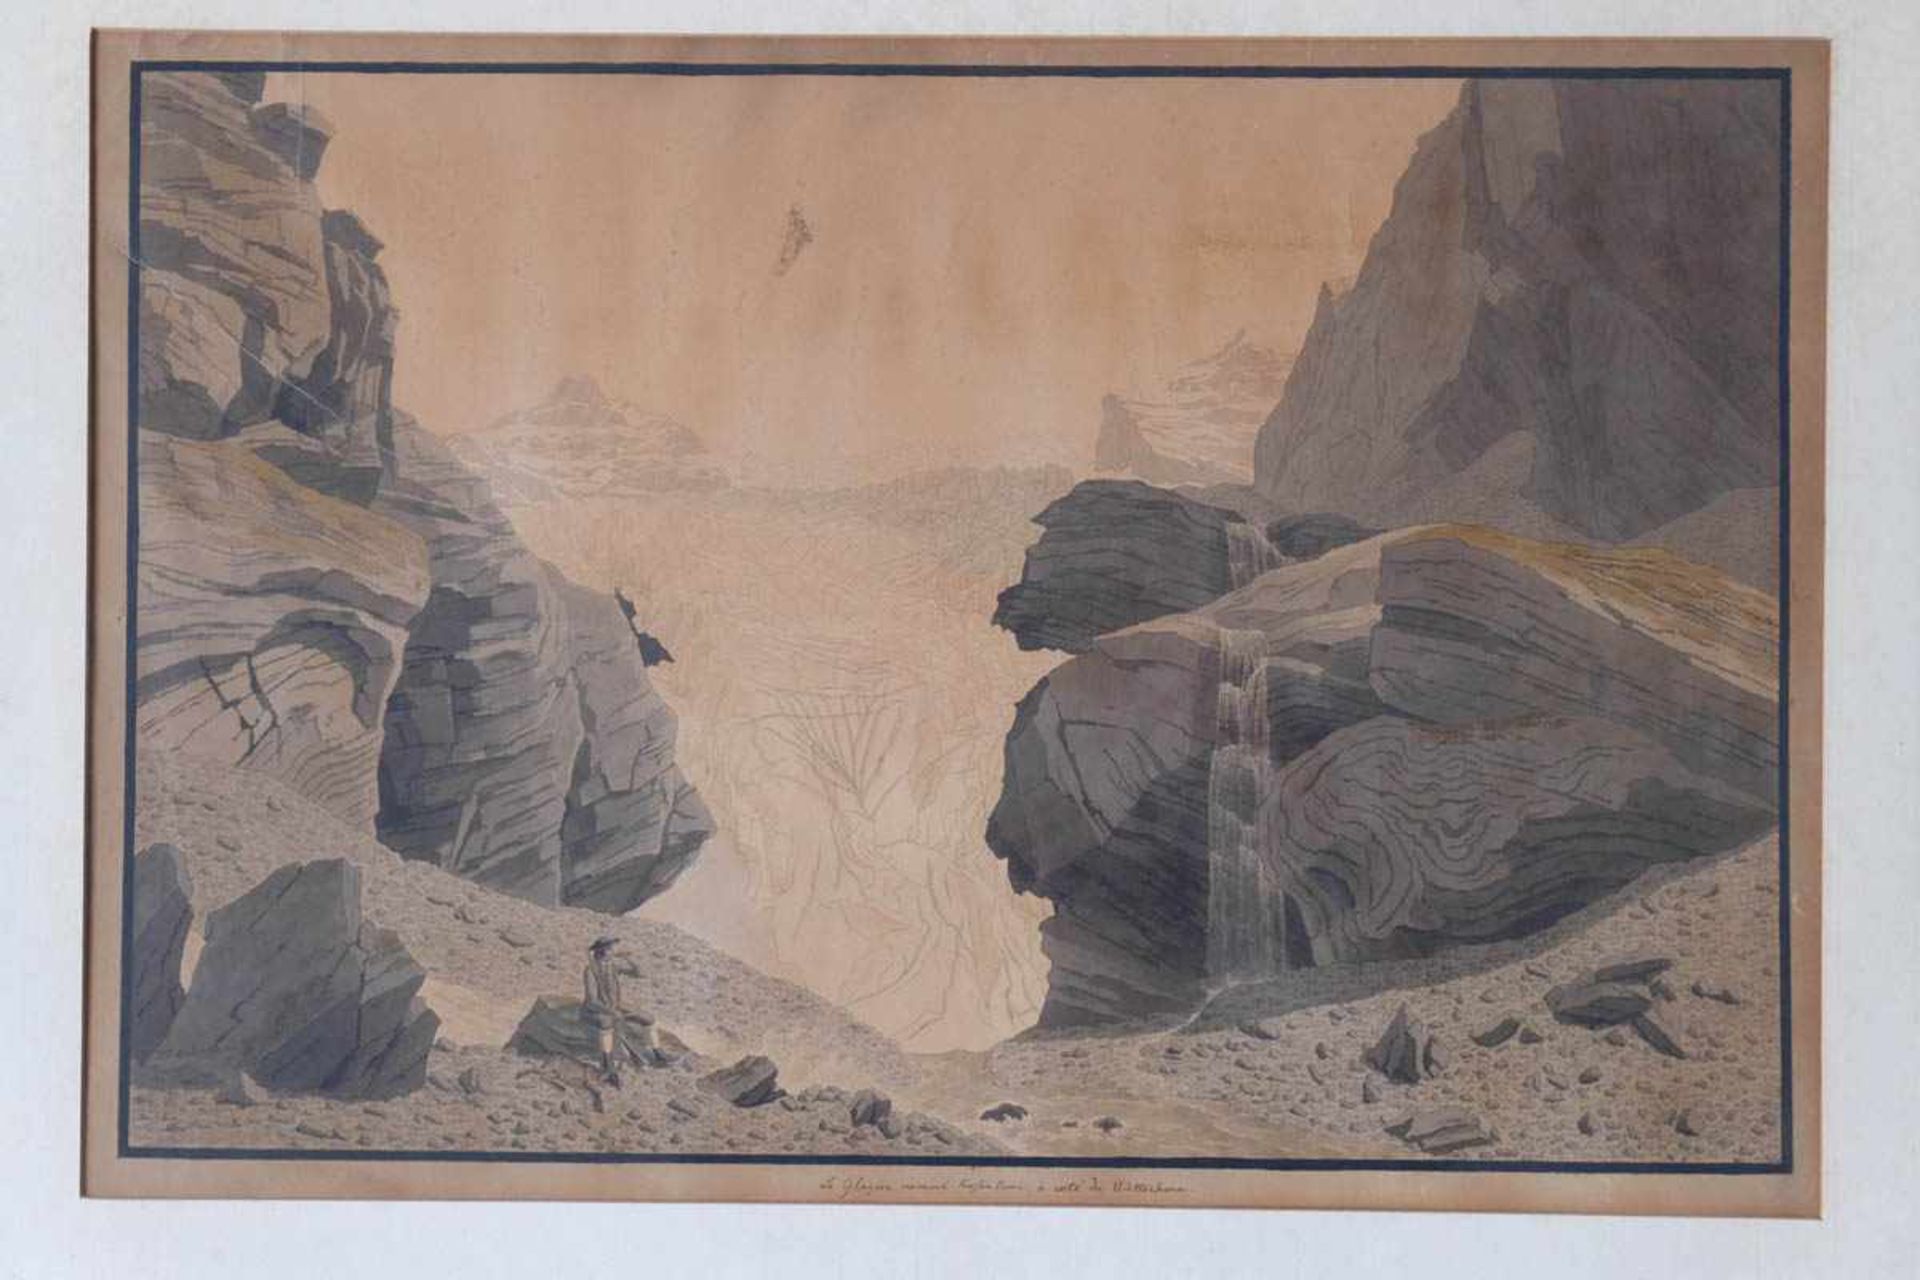 Biedermann, Johann Jakob Der Gletscher Rosenlaui mit dem Wetterhorn, kolorierte Radierung,